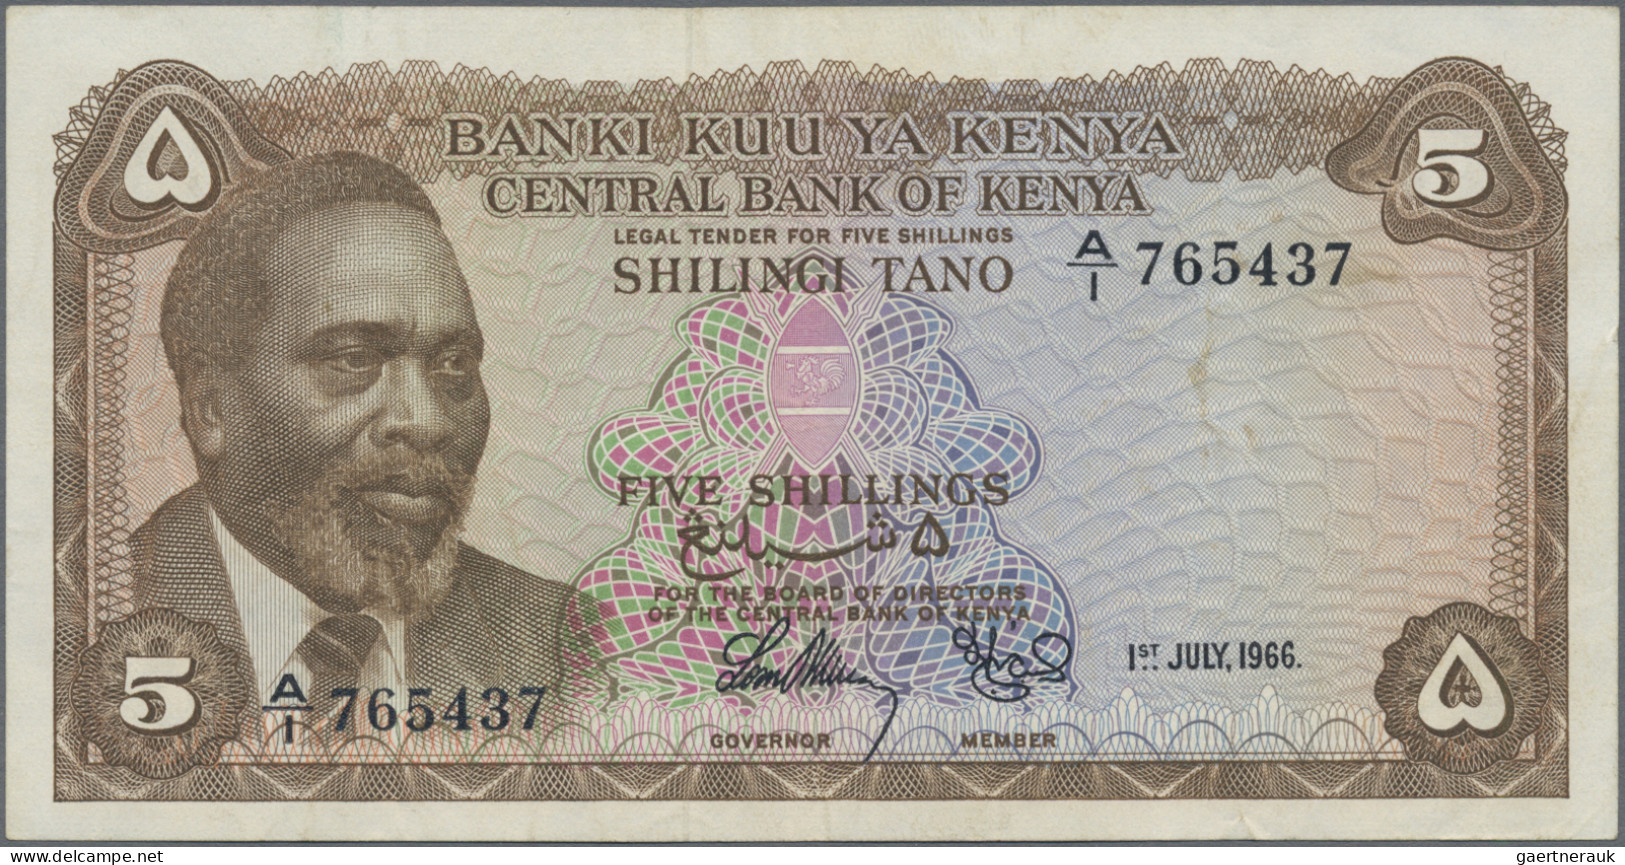 Kenya: Central Bank of Kenya, lot with 5 banknotes, series 1966/68, with 5, 10,